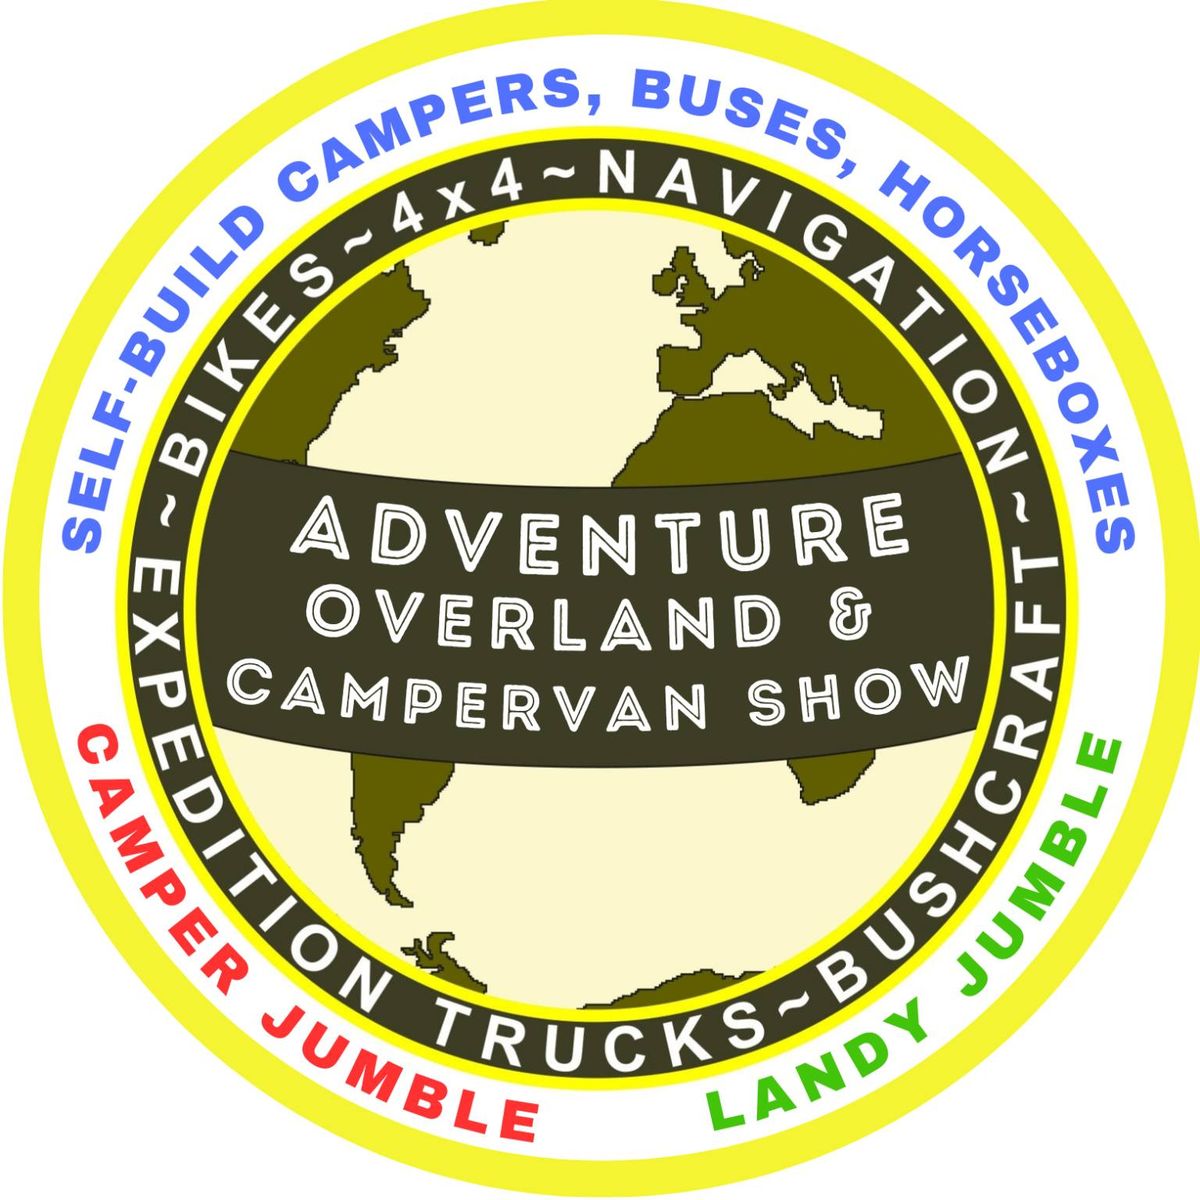 Adventure Overland Show + International Campervan Show